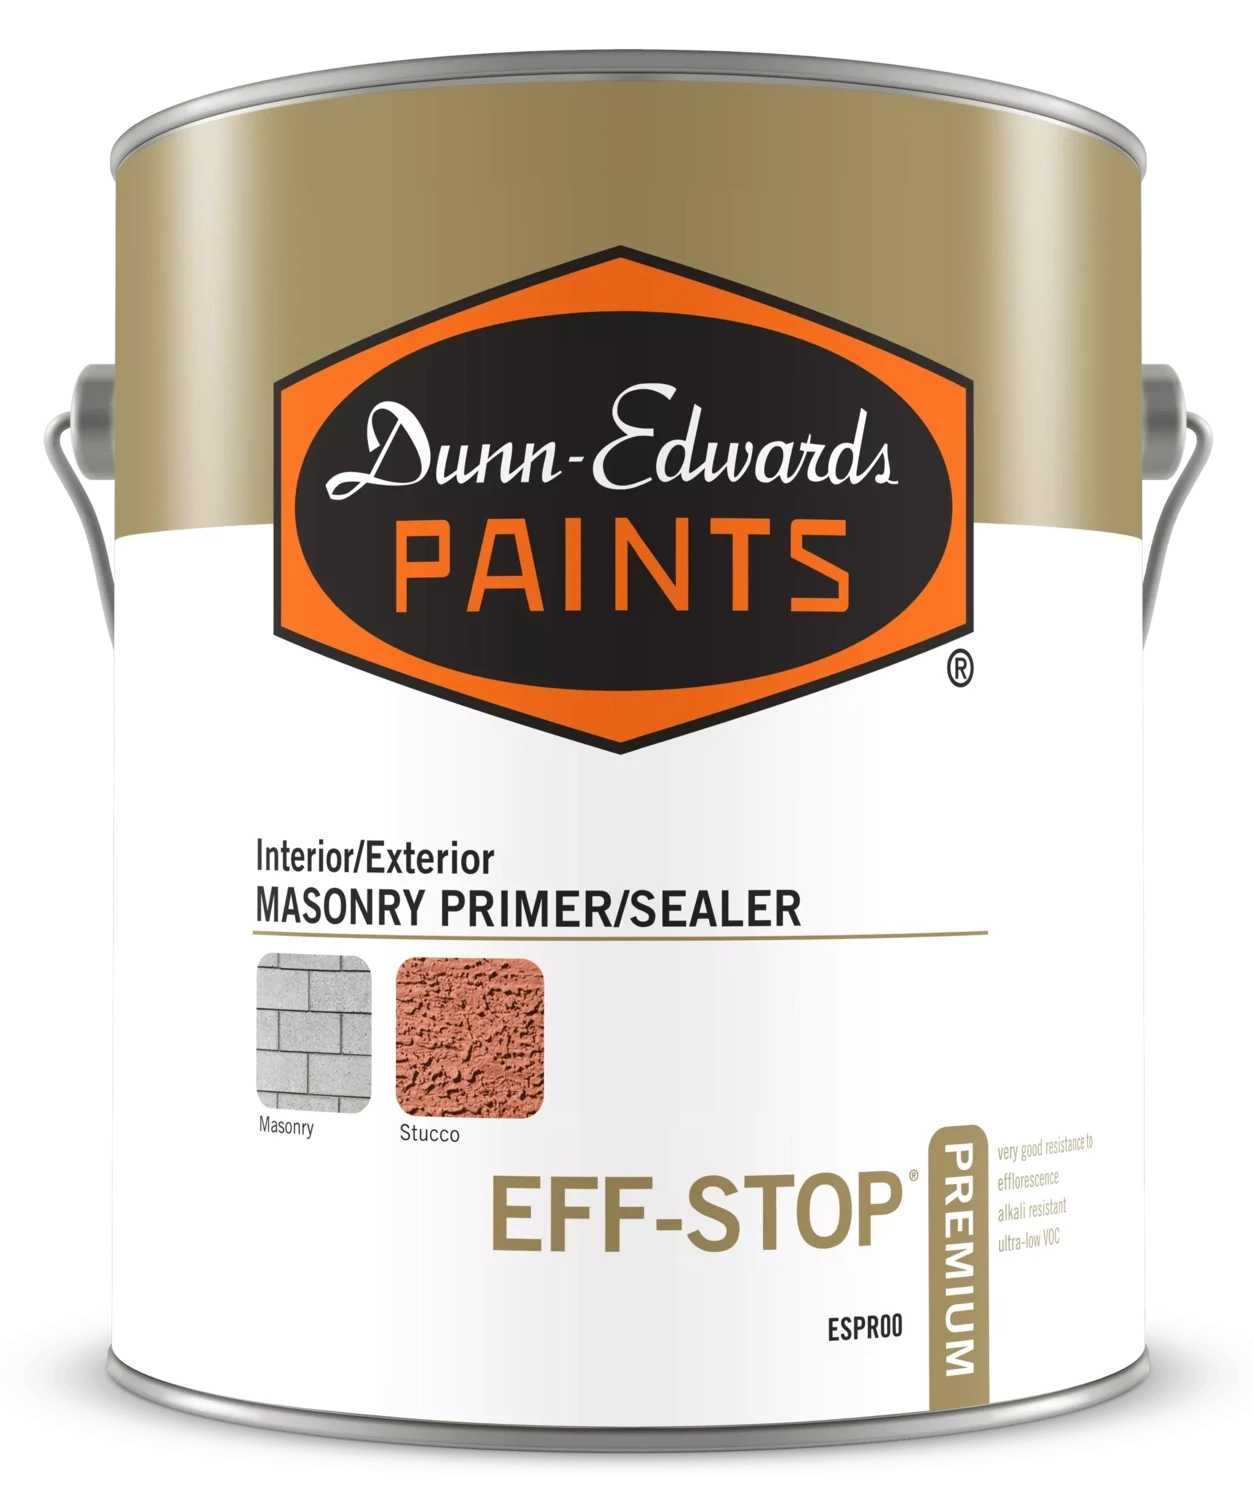 Eff-Stop Premium Interior/Exterior Masonry Primer Sealer